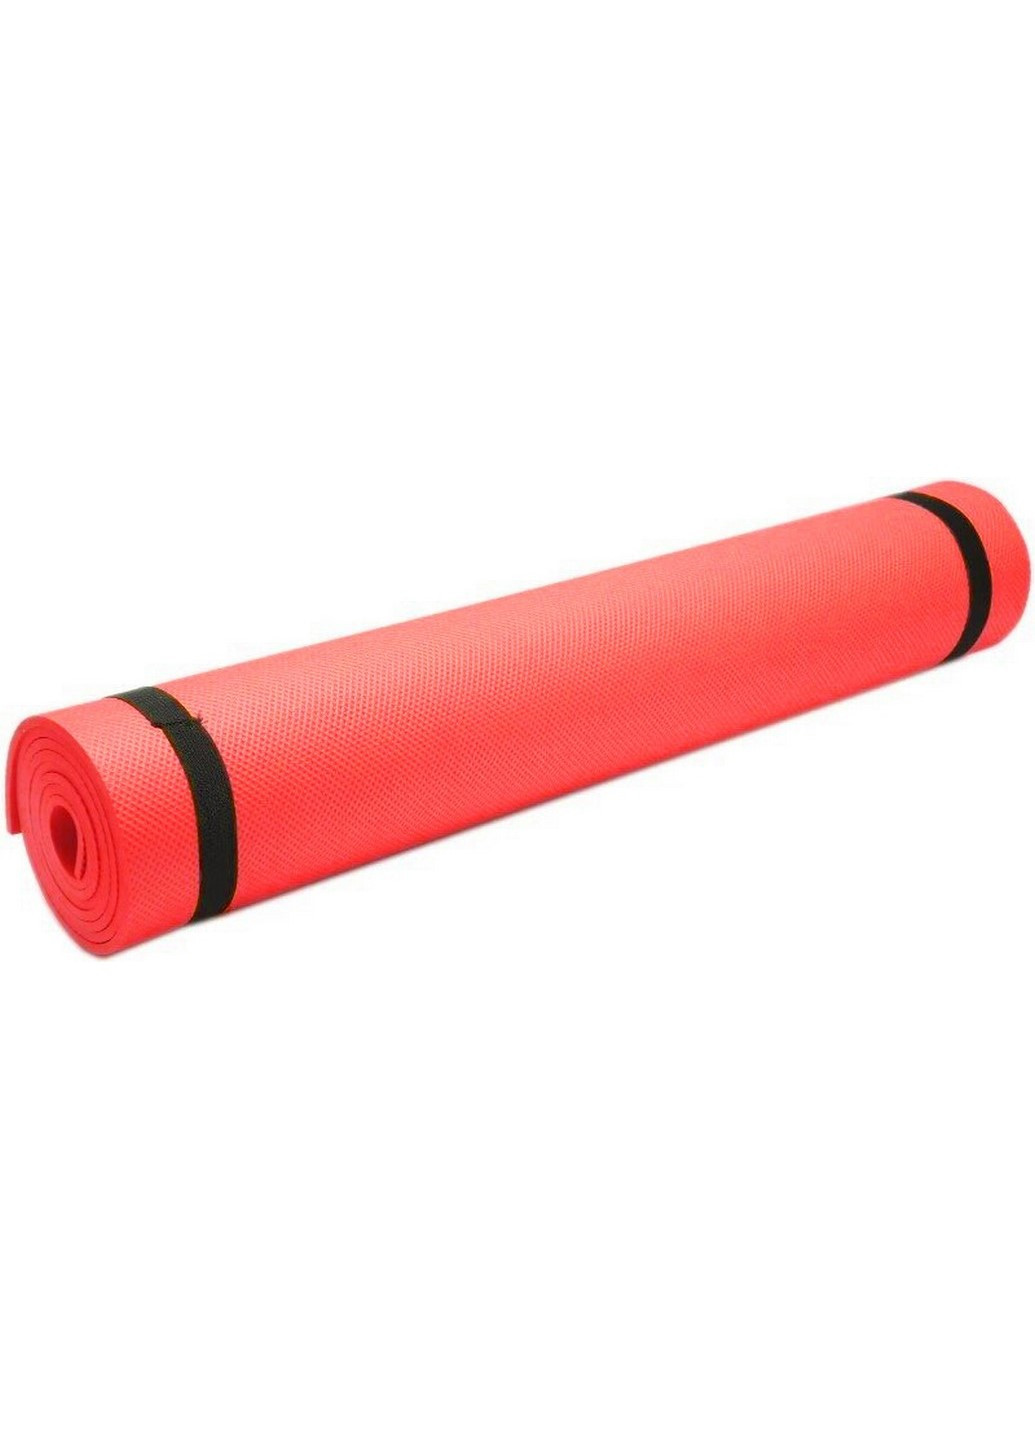 Йогамат M 0380-3 173х61 см, толщина 6 мм (Красный) Profi (237823677)